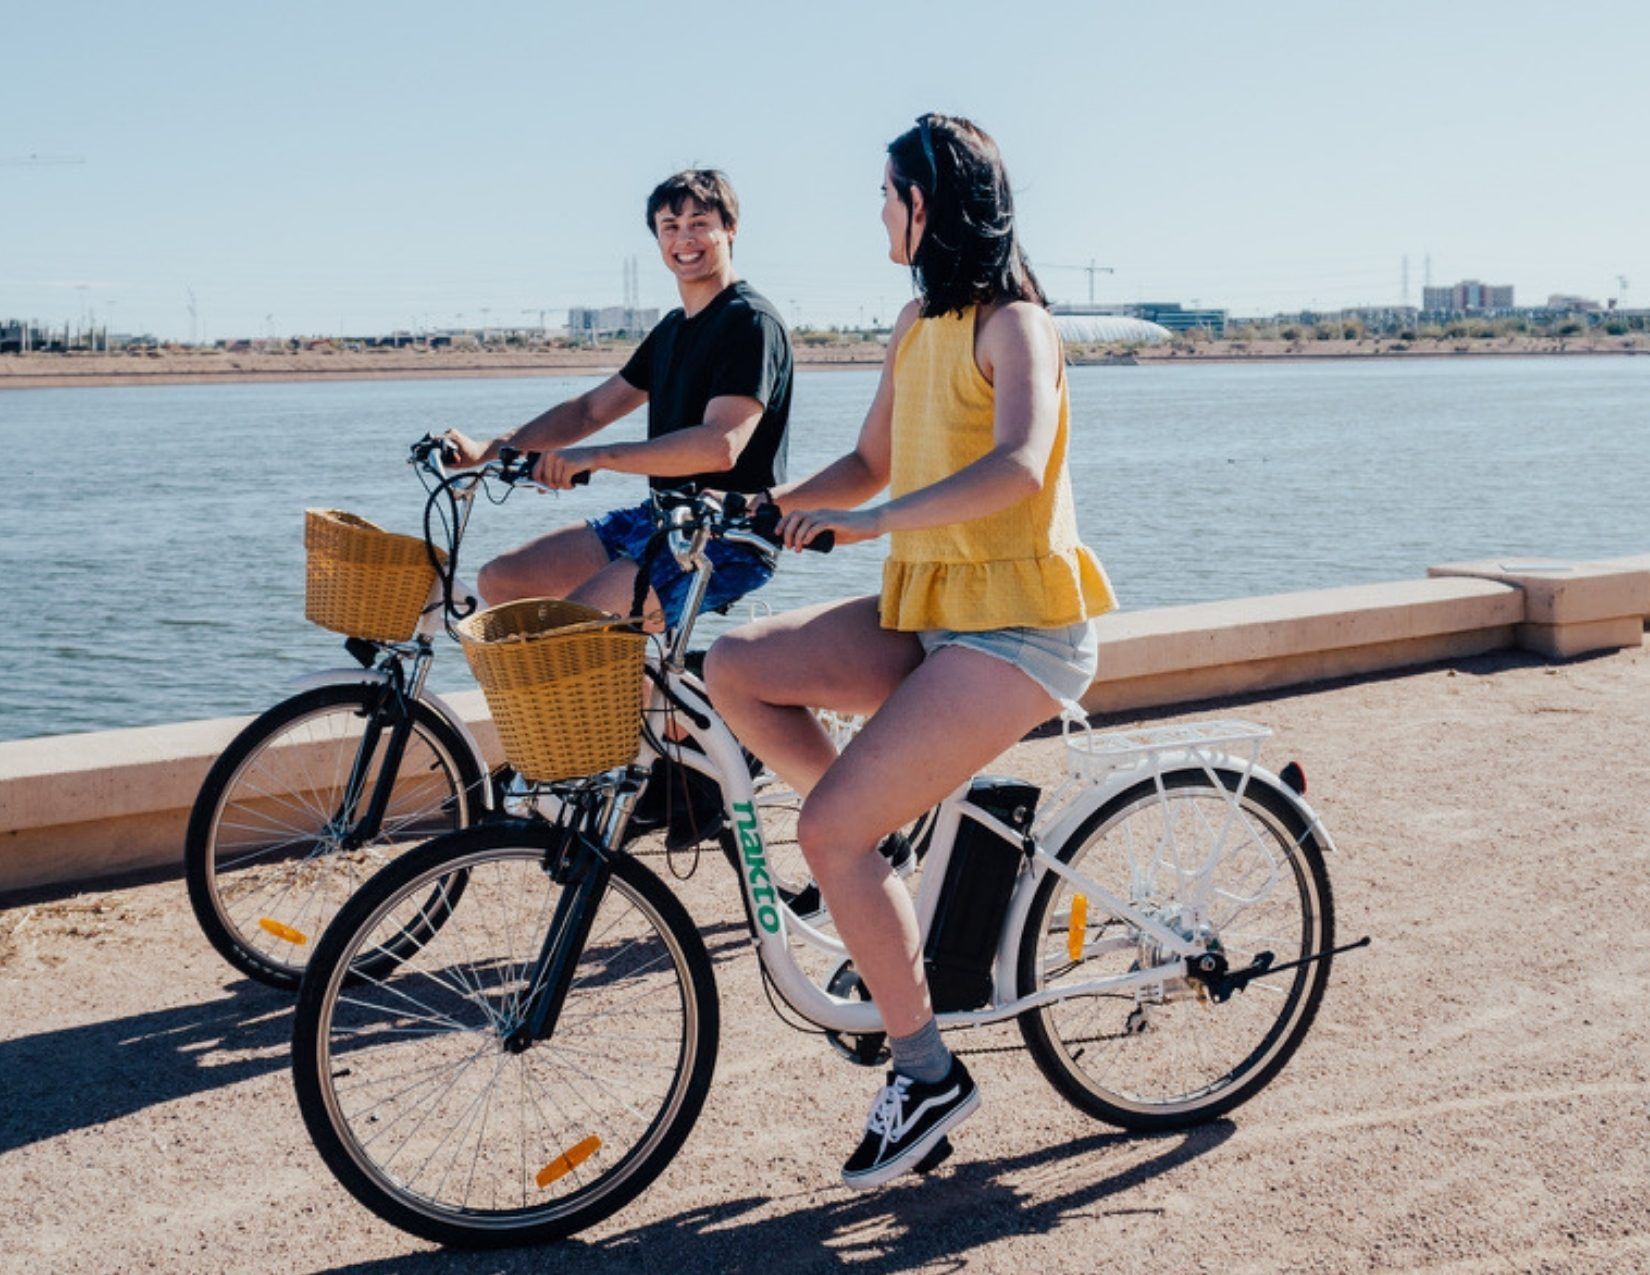 Ian and Lacy Cain riding bikes along Tempe Town Lake in Tempe Arizona